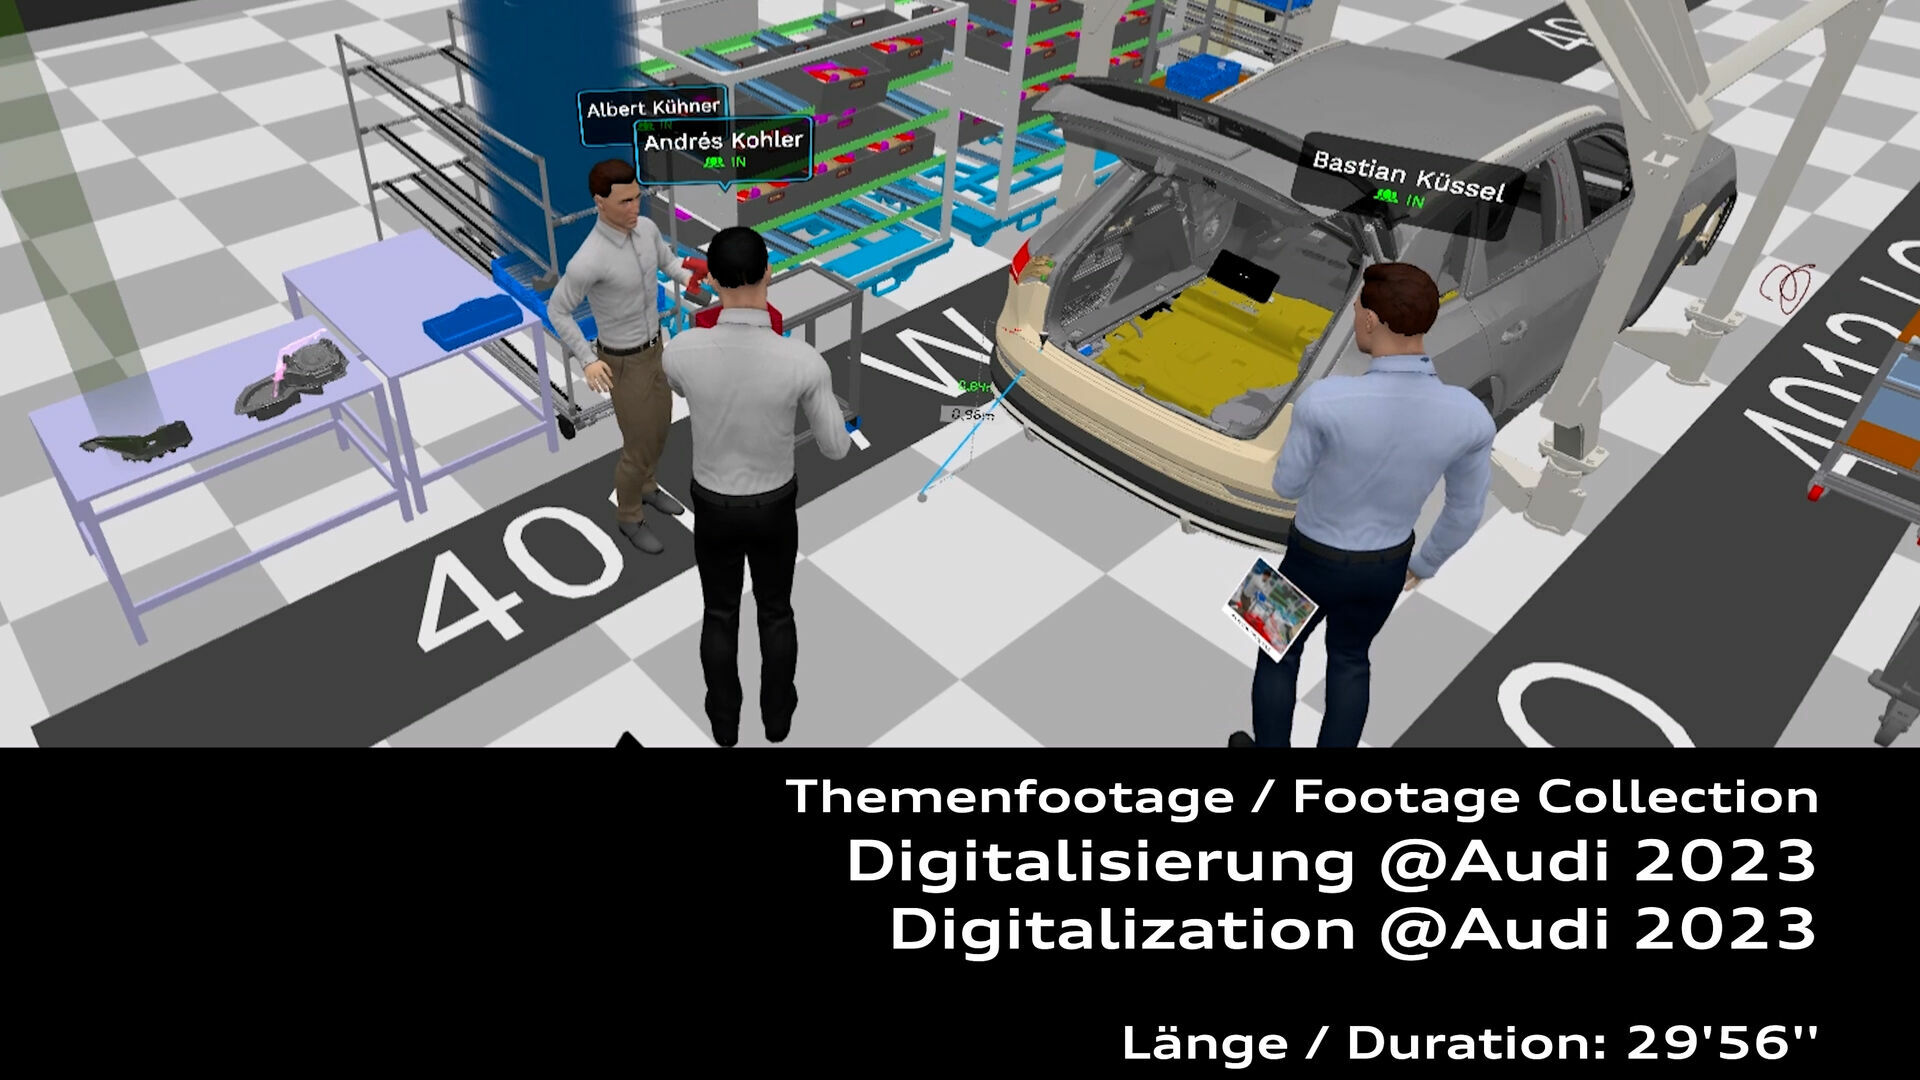 Footage: Digitalisierung @Audi 2023